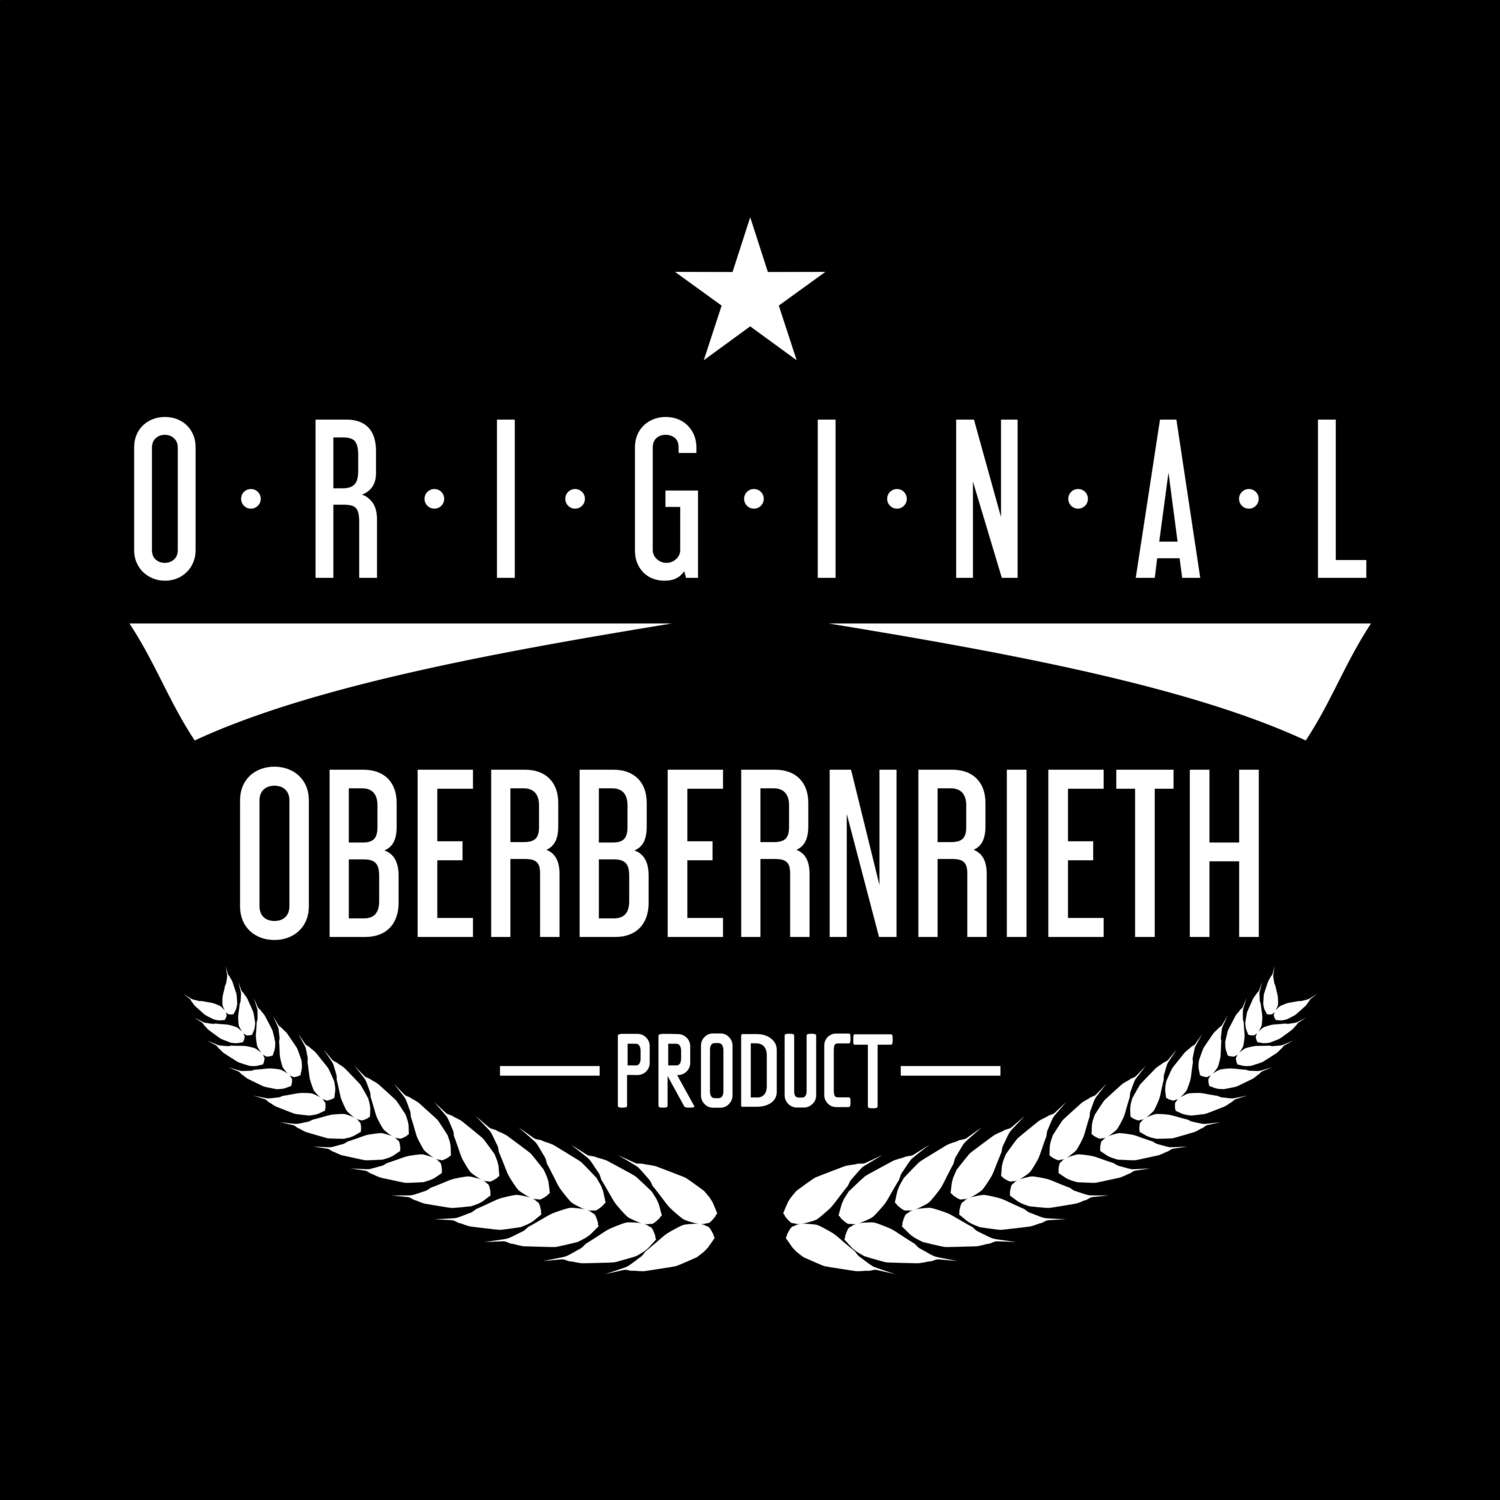 Oberbernrieth T-Shirt »Original Product«